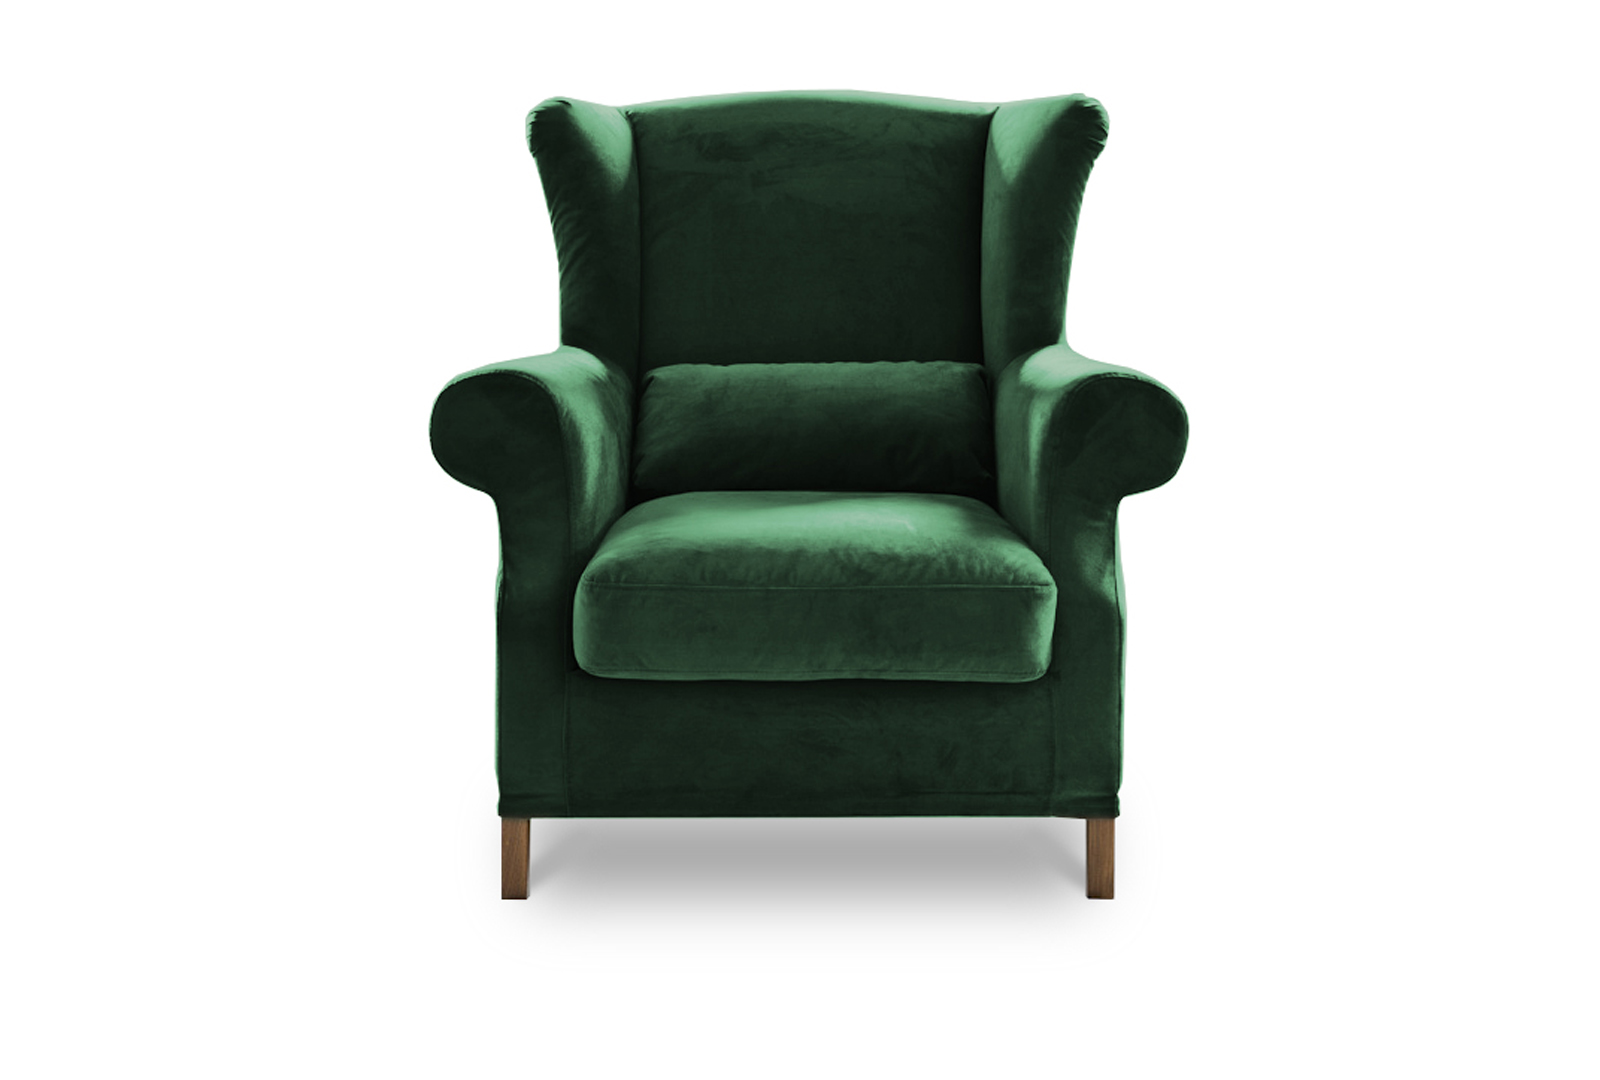 Harlow bottle green armchair